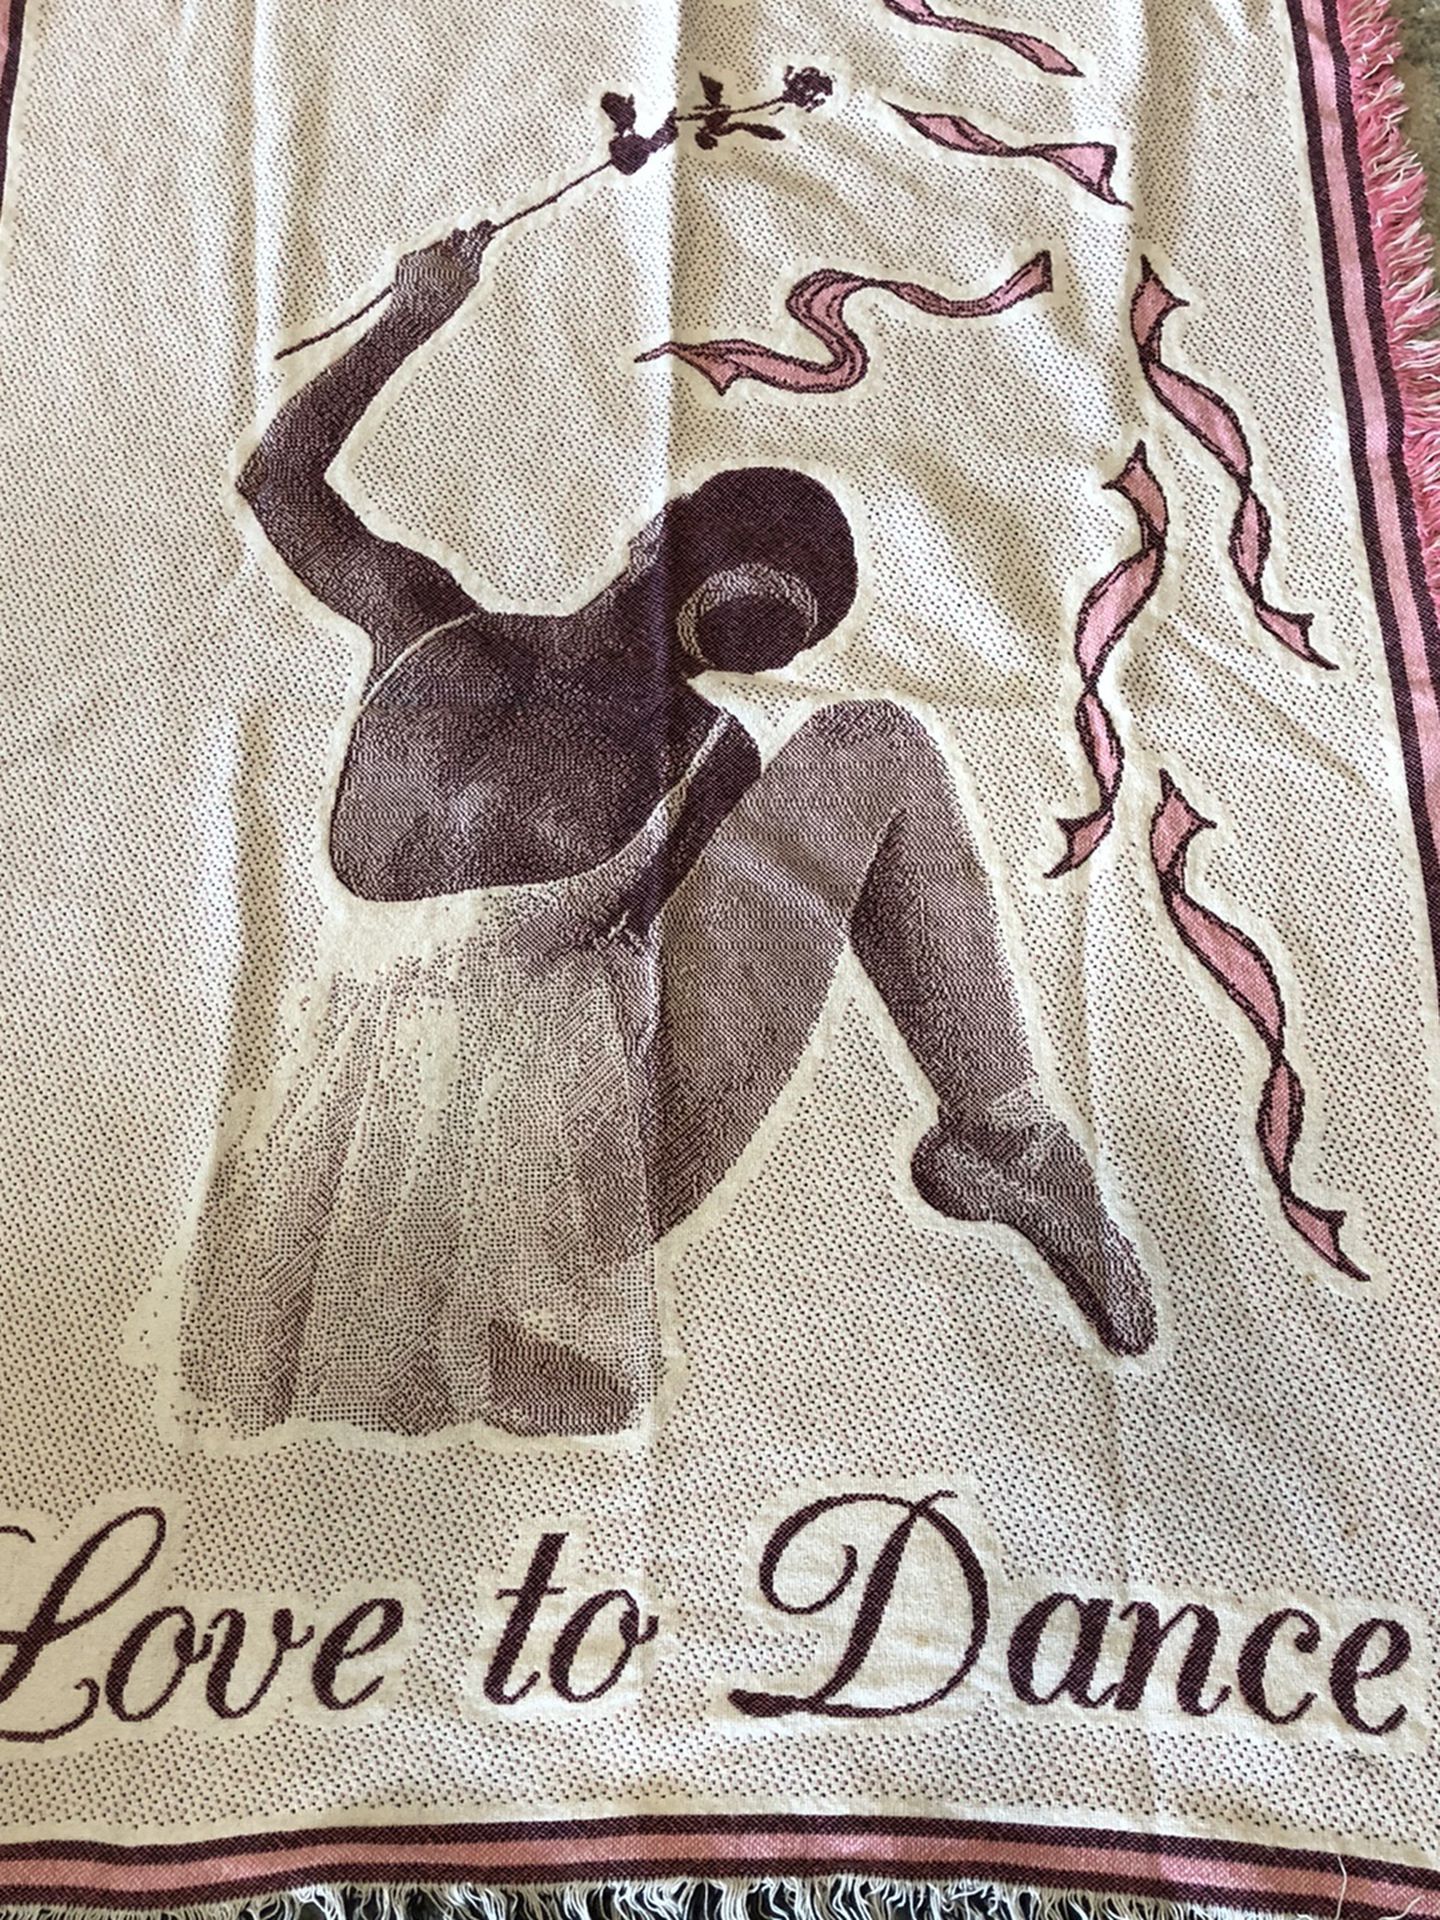 Dance Blanket